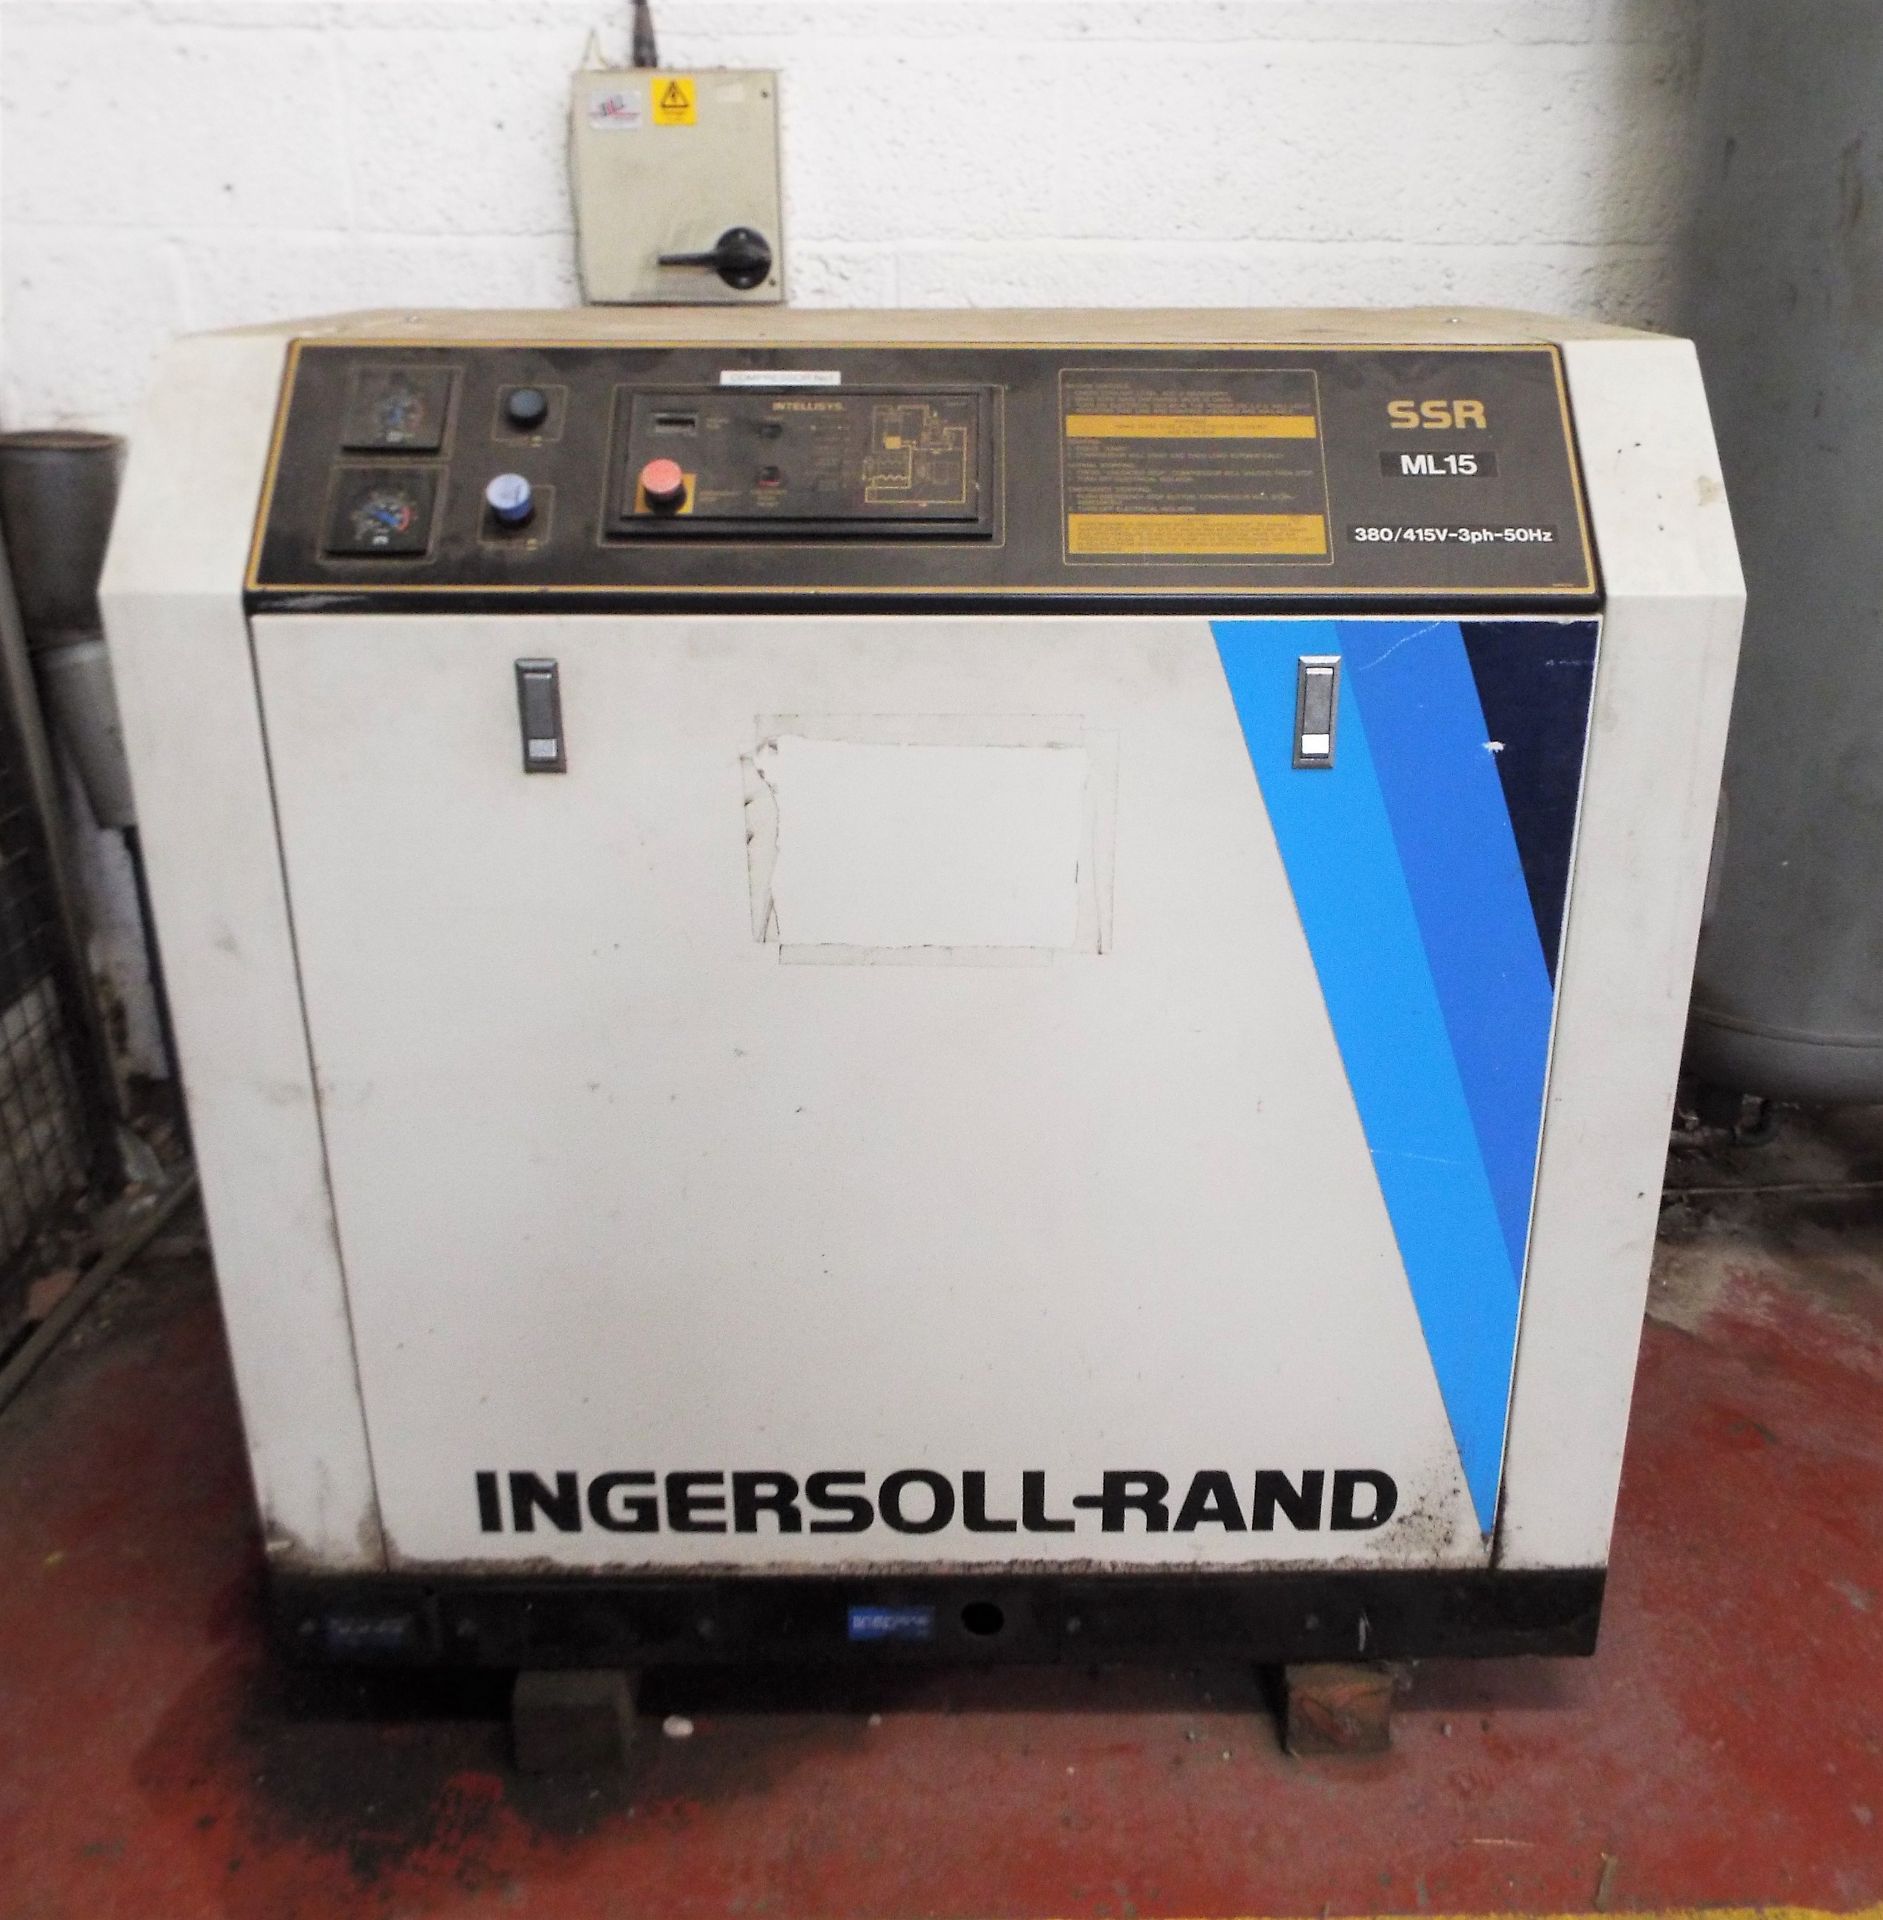 Ingersoll Rand SSR ML15 Compressor,Rednal Air Receiver & Ingersoll Rand Oil Separator